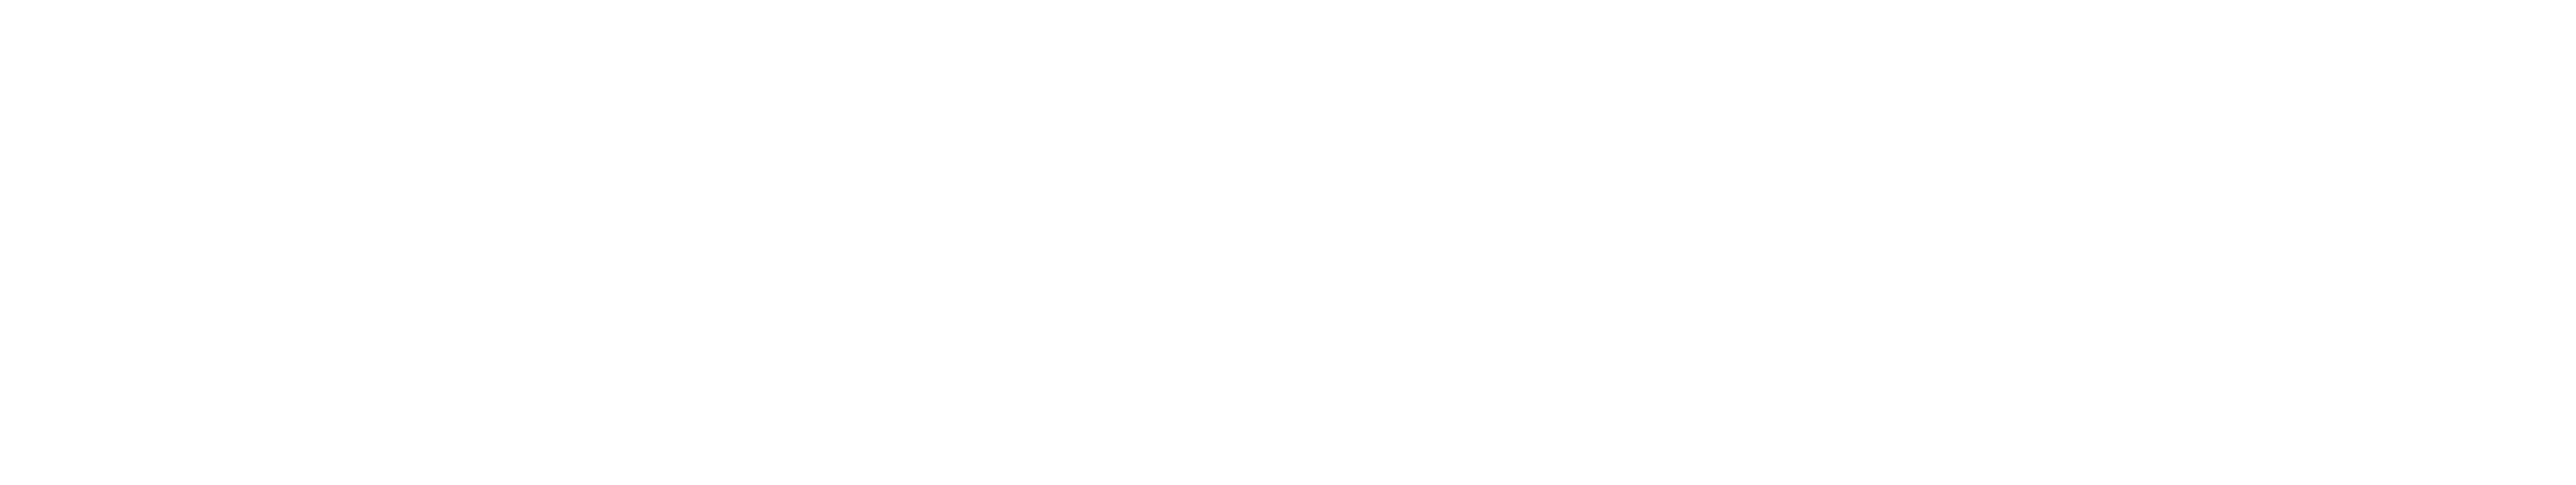 Pennsylvania Farmers Union